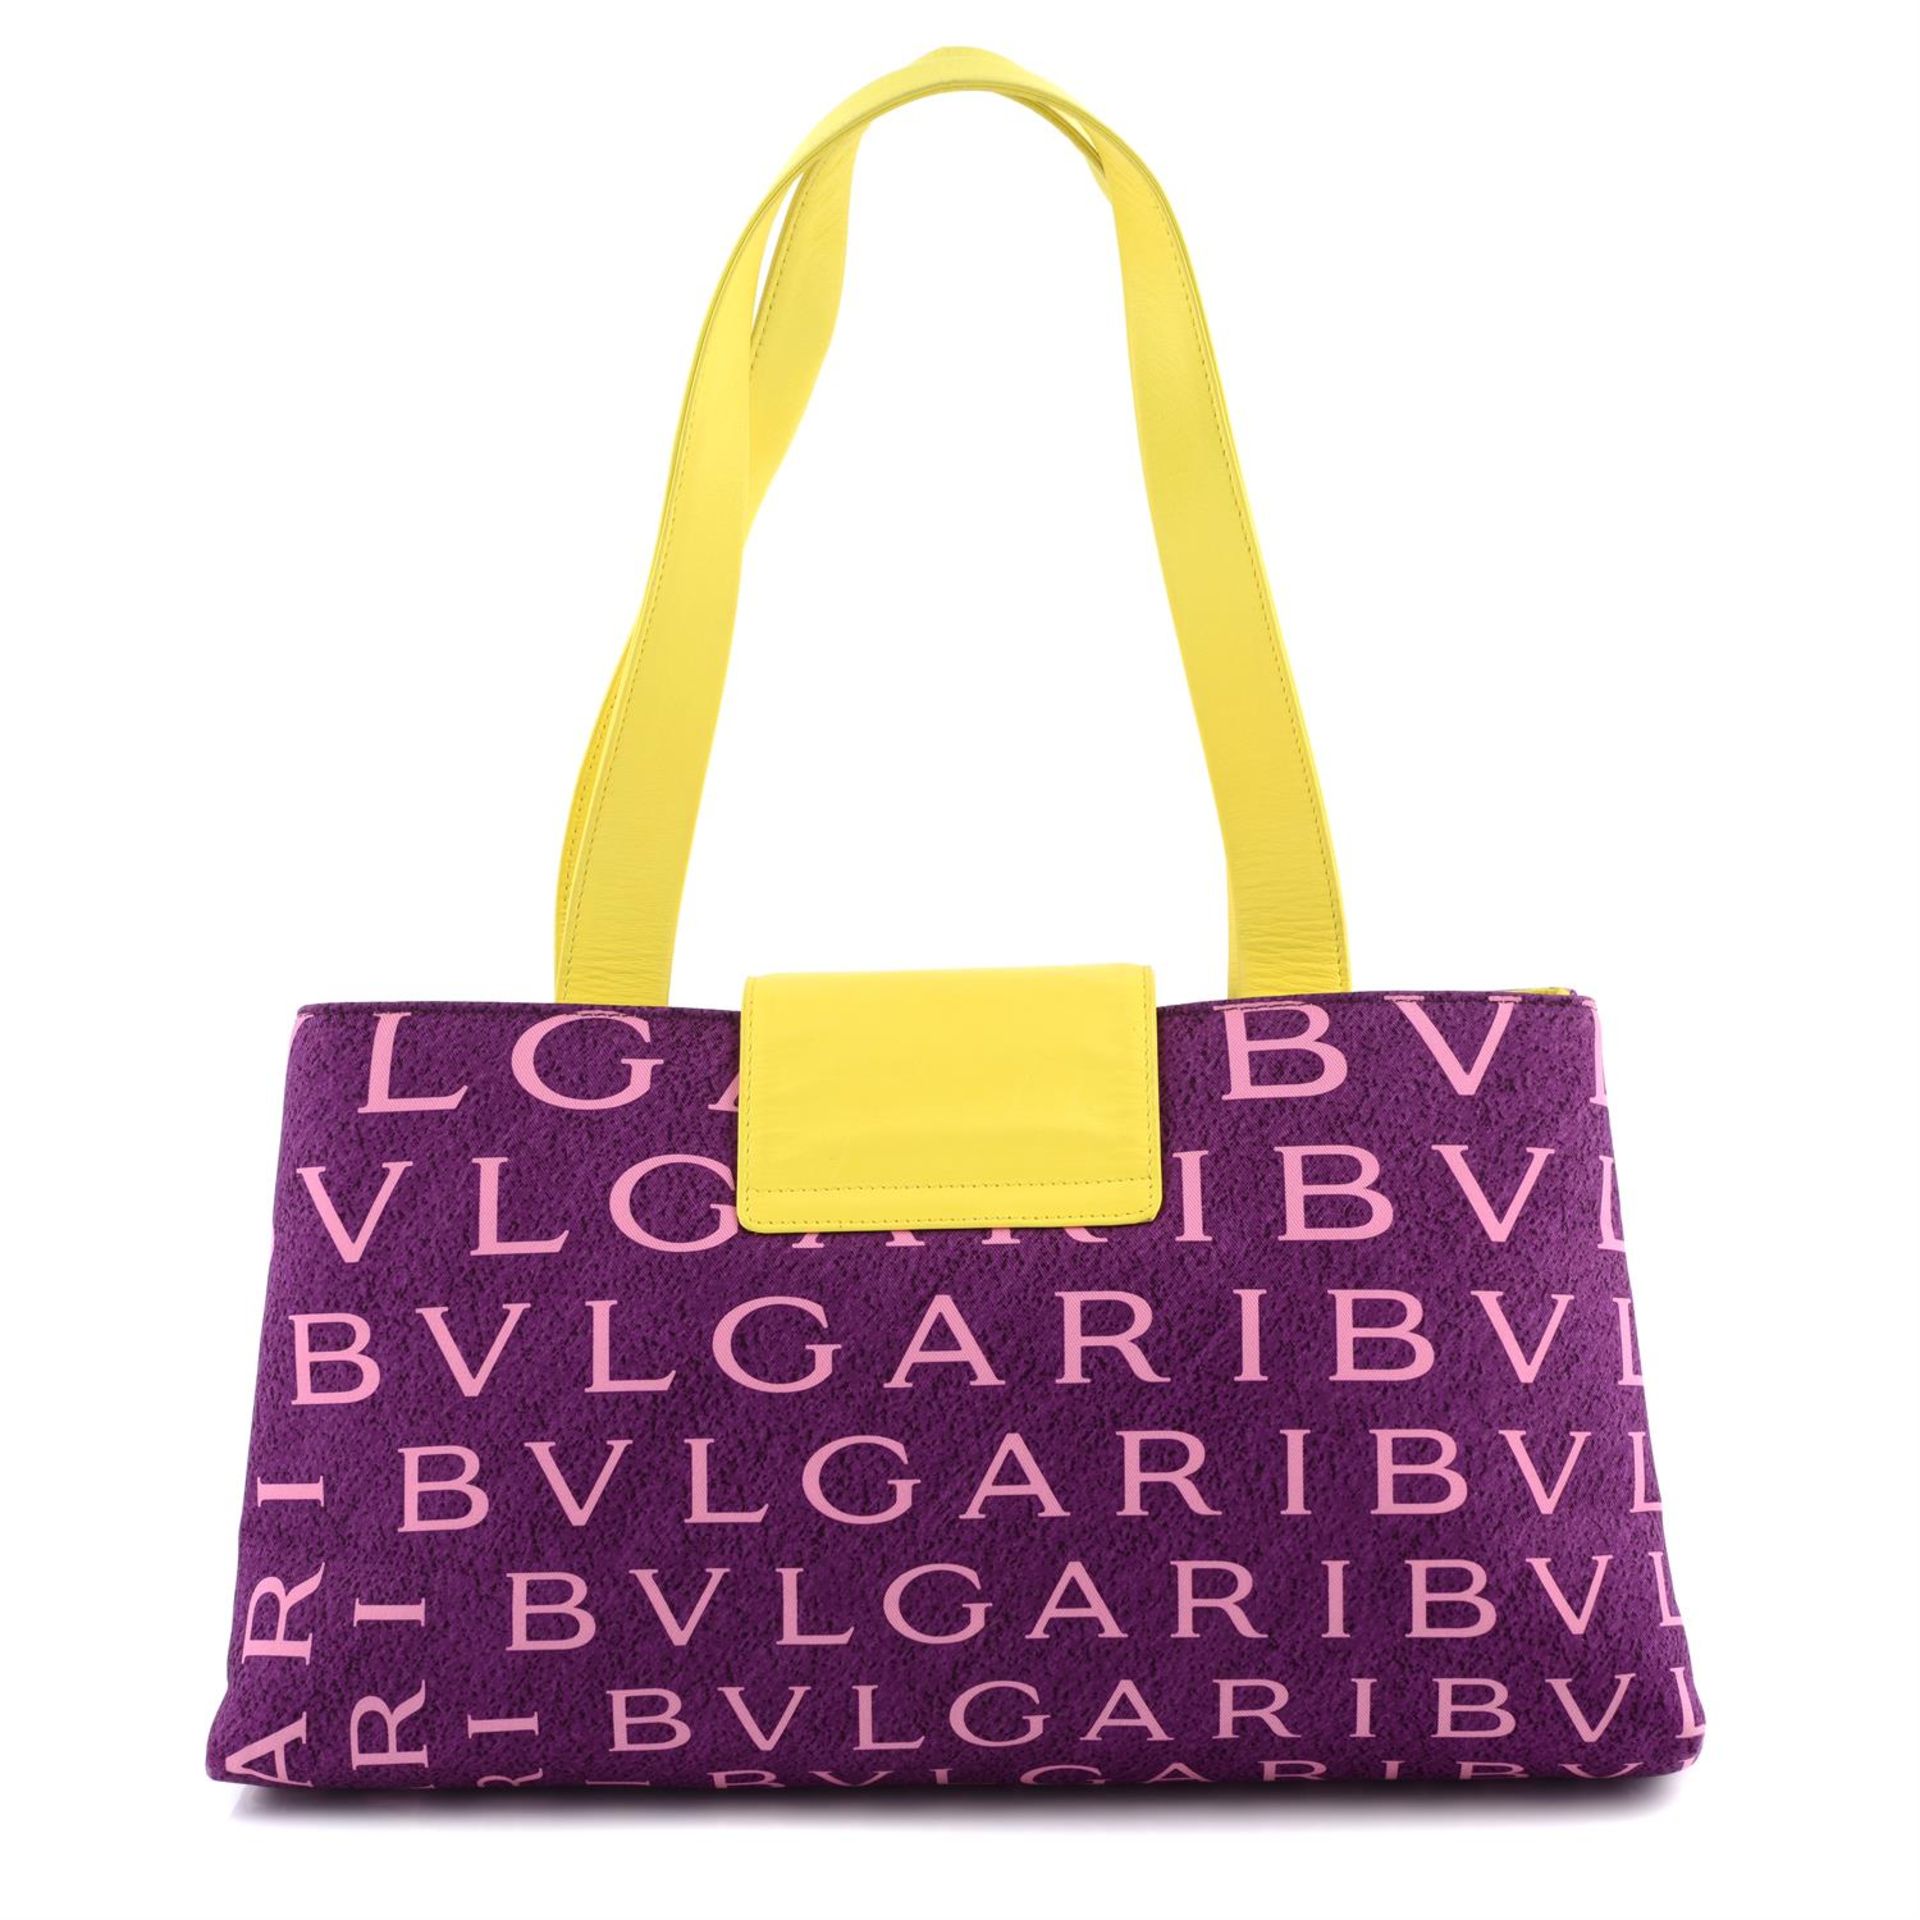 BULGARI - a purple monogram handbag. - Image 2 of 4